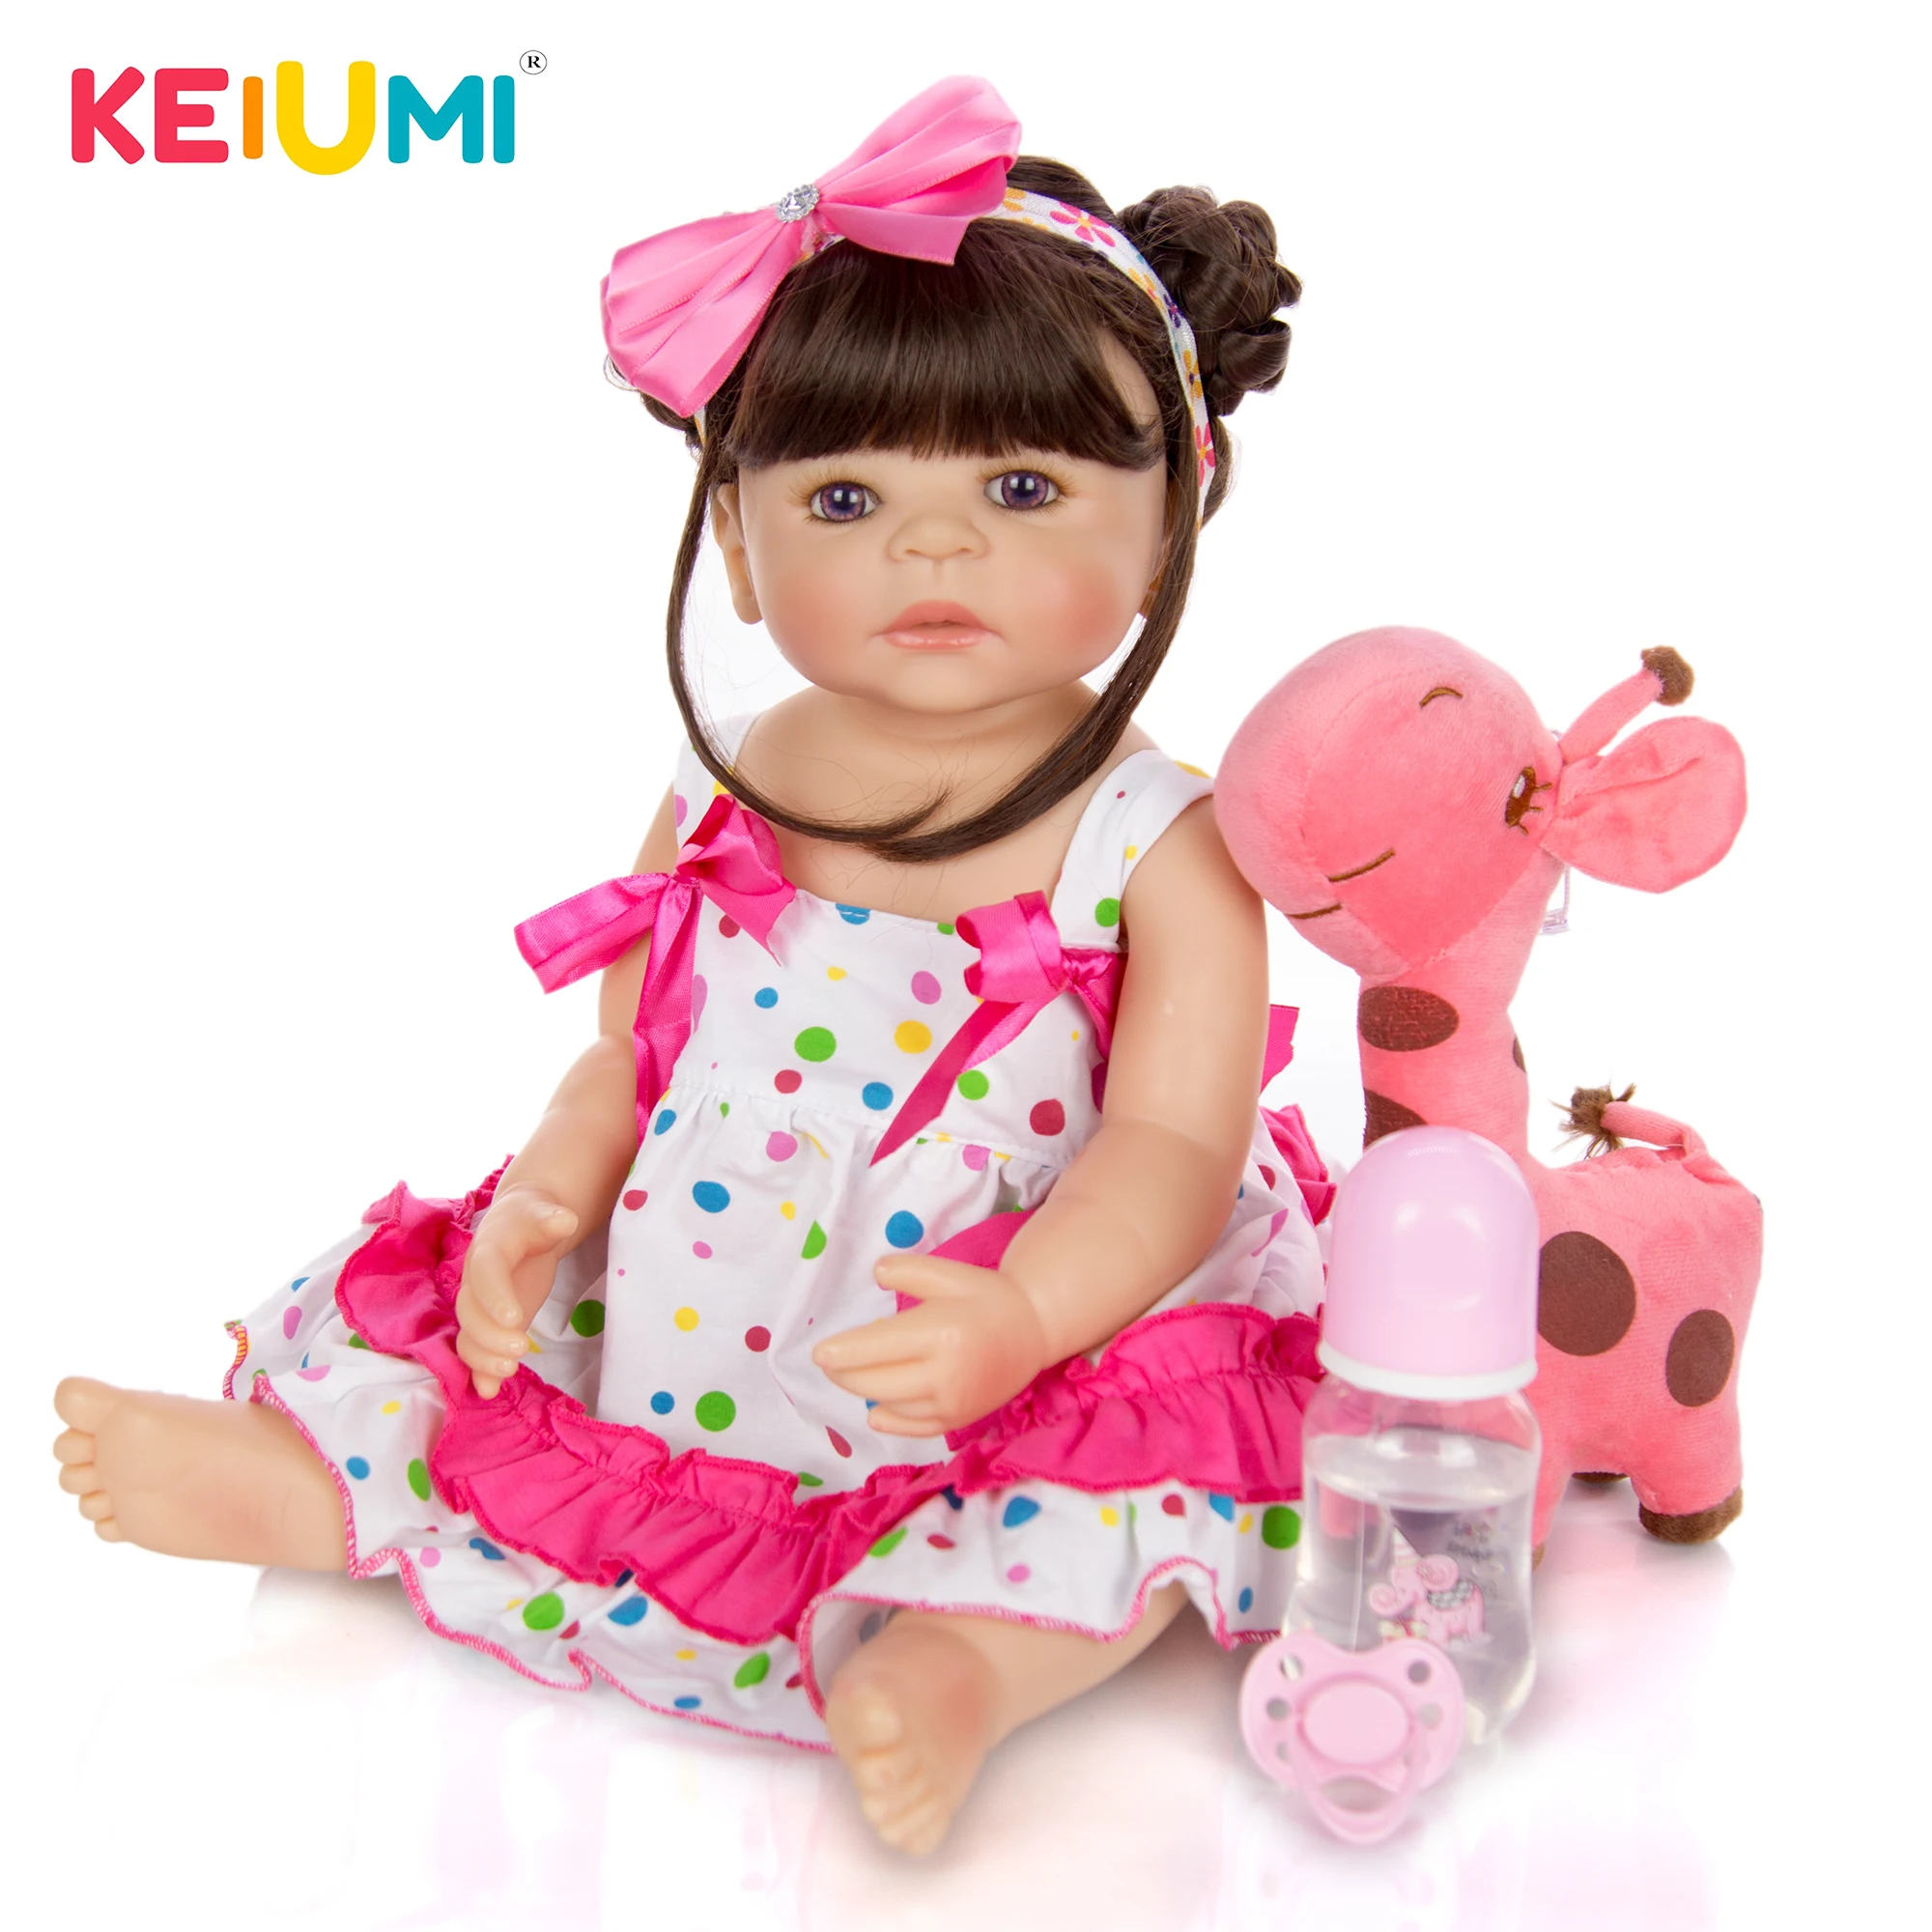 

KEIUMI Hotsale 22 Inch Reborn Baby Doll Charming Bonecas Infantil Meninas Lovely Toy Full Silicone Vinyl For Kids Birthday Gift